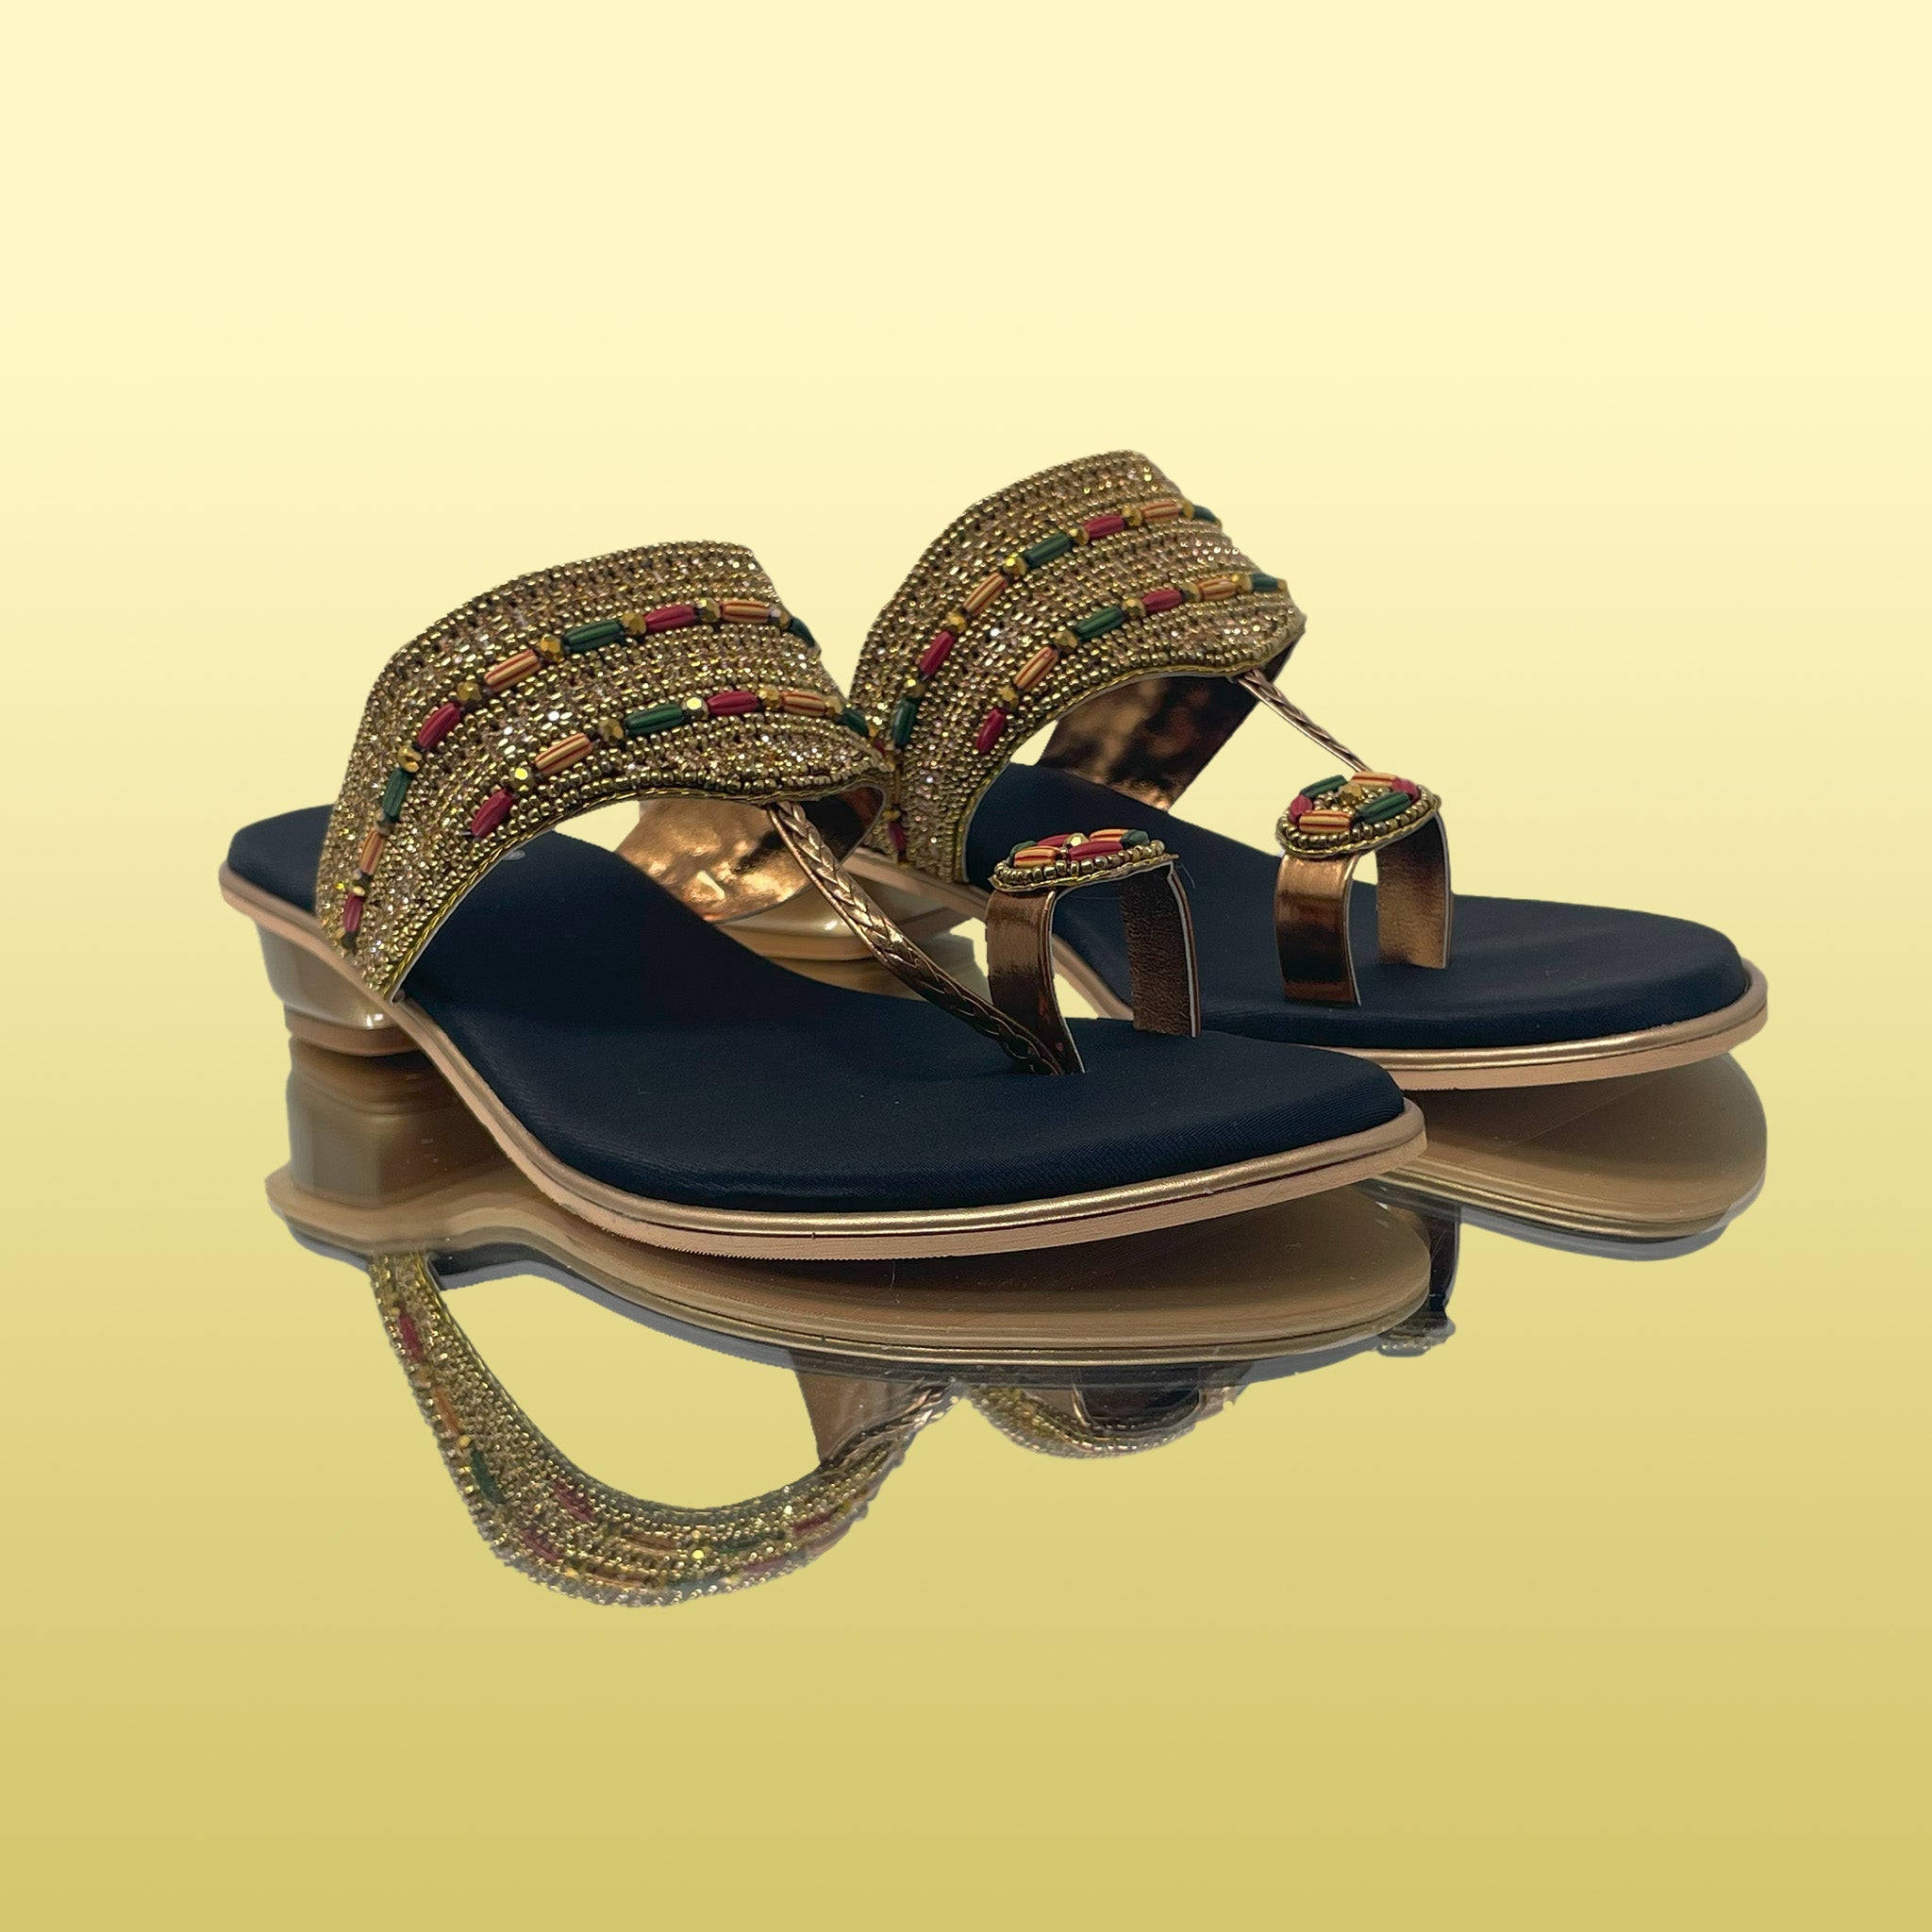 Antique Zari Embellished Toe-ring Heels - GlobalStep - Heels - 36